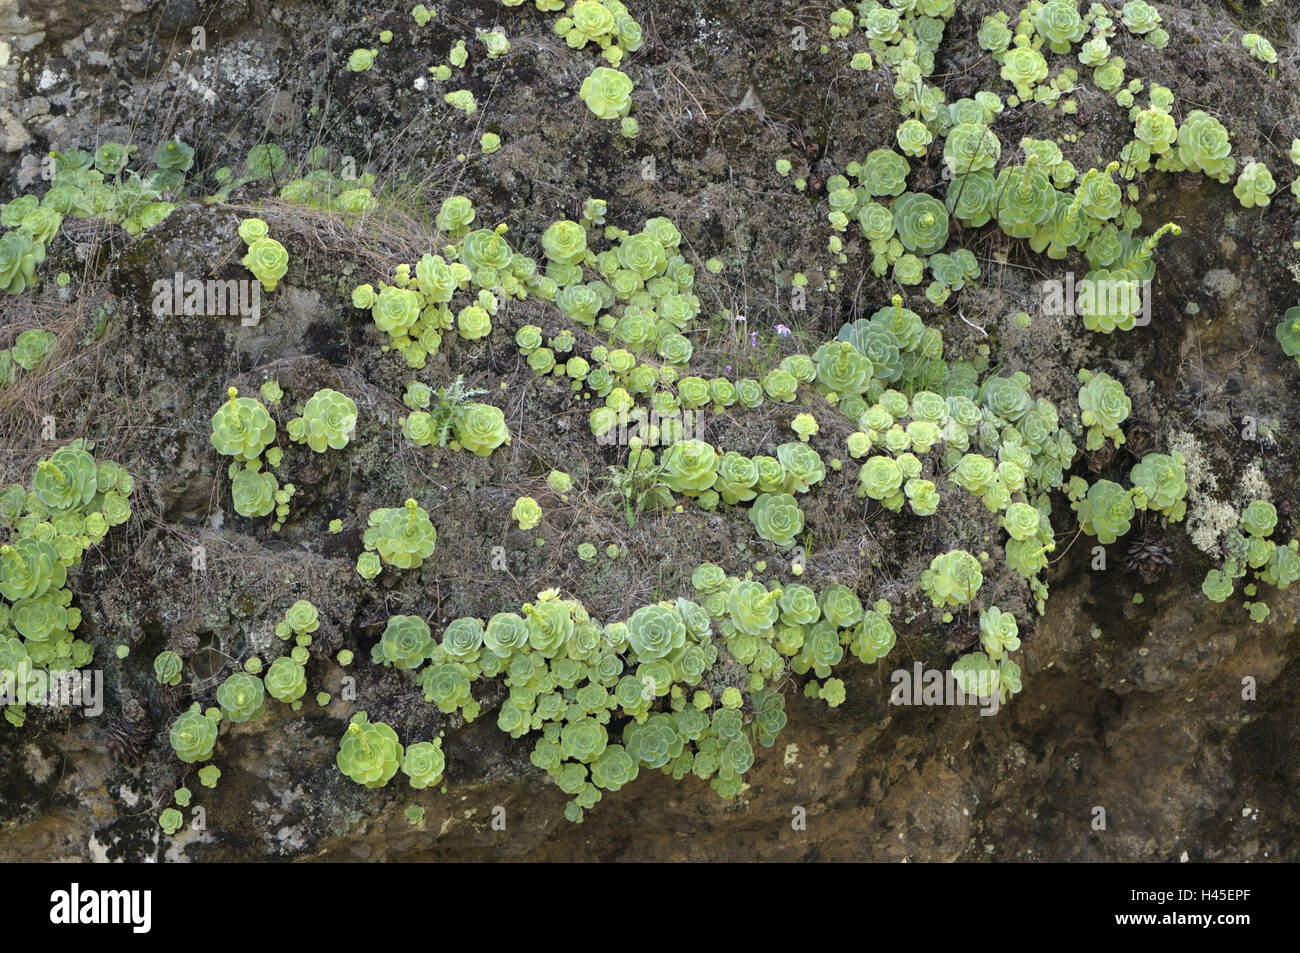 Spain, Canary islands, island grain Canaria, rocks, Aeonium, Dickblattgewächse, detail, Stock Photo